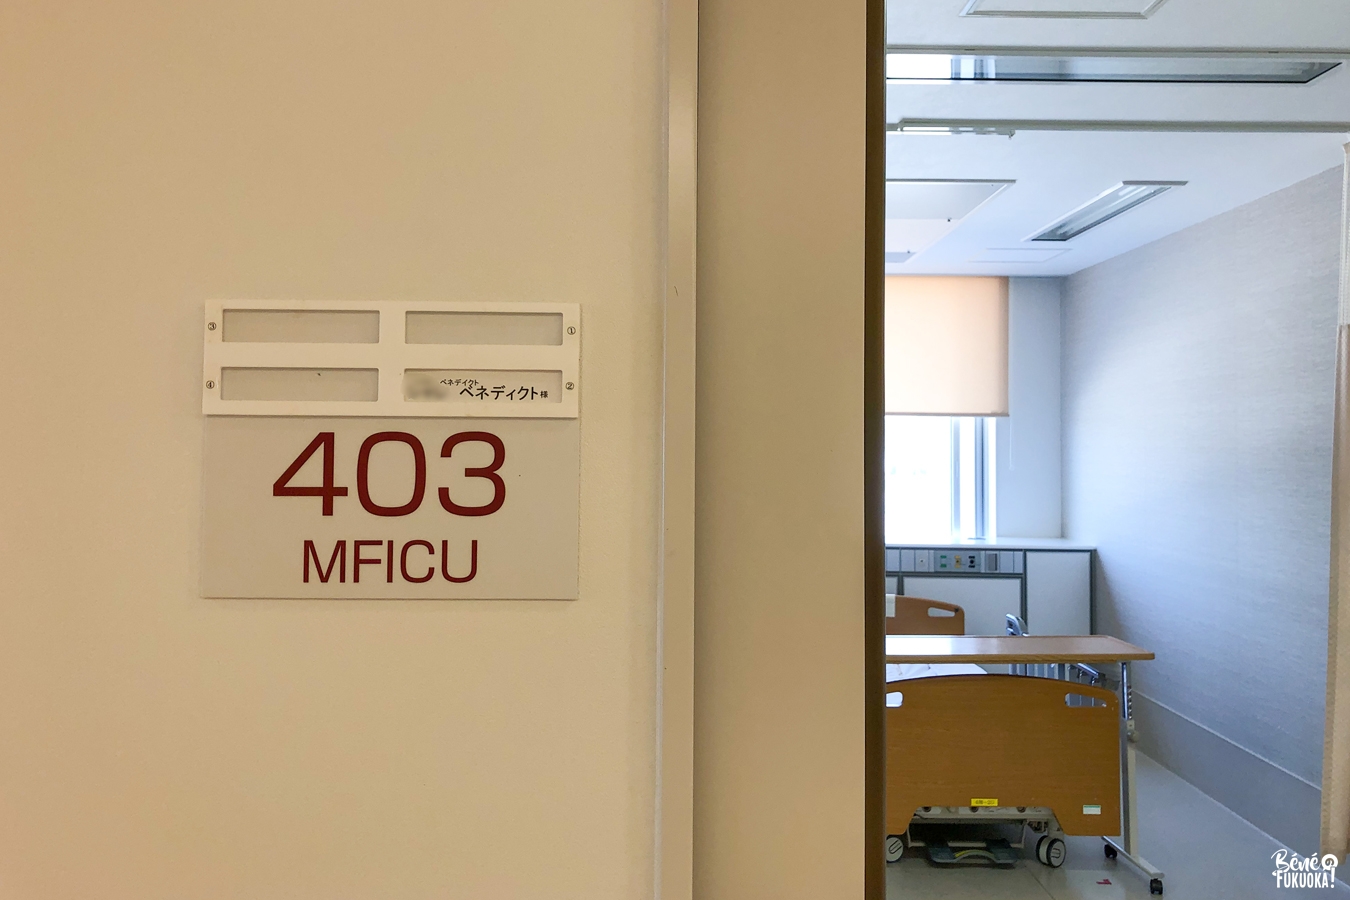 Chambre MFICU (Maternal Fetal Intensive Care Unit), hôpital universitaire de Fukuoka